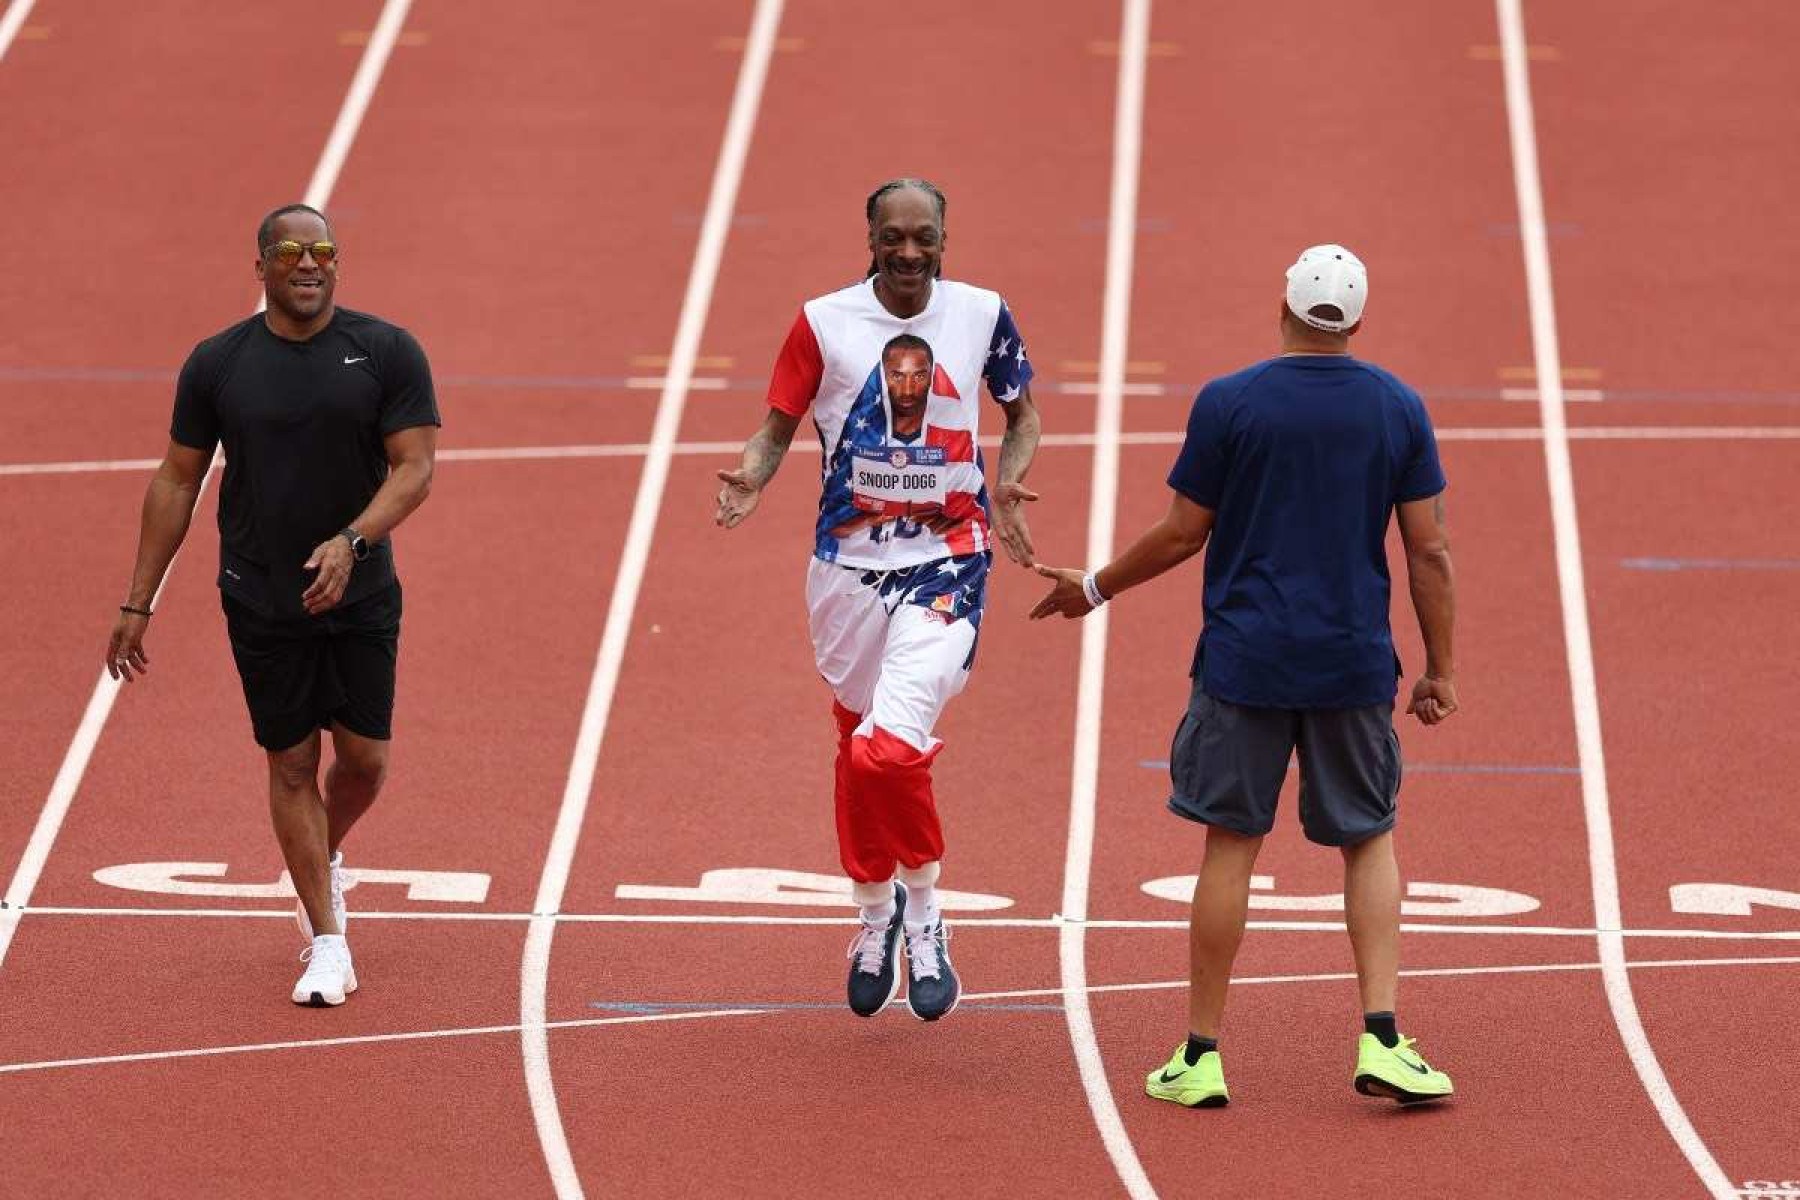 Snoop Dogg participa de corrida de 200 metros nos EUA; veja